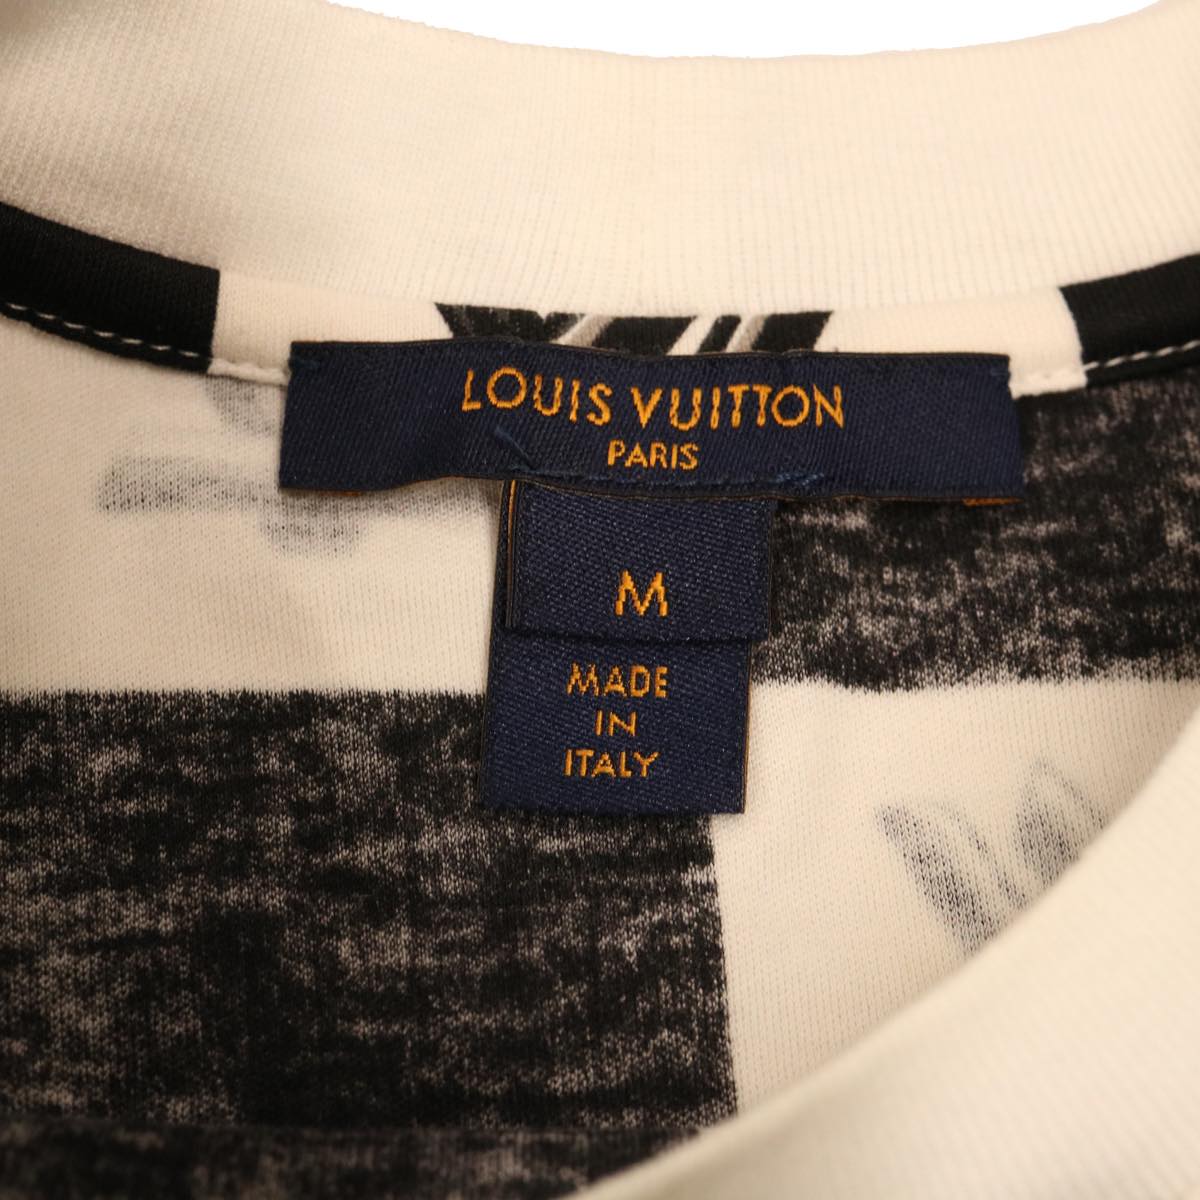 LOUIS VUITTON Plaid Short sleeved T-shirt 100% cotton M White Black Auth ak159